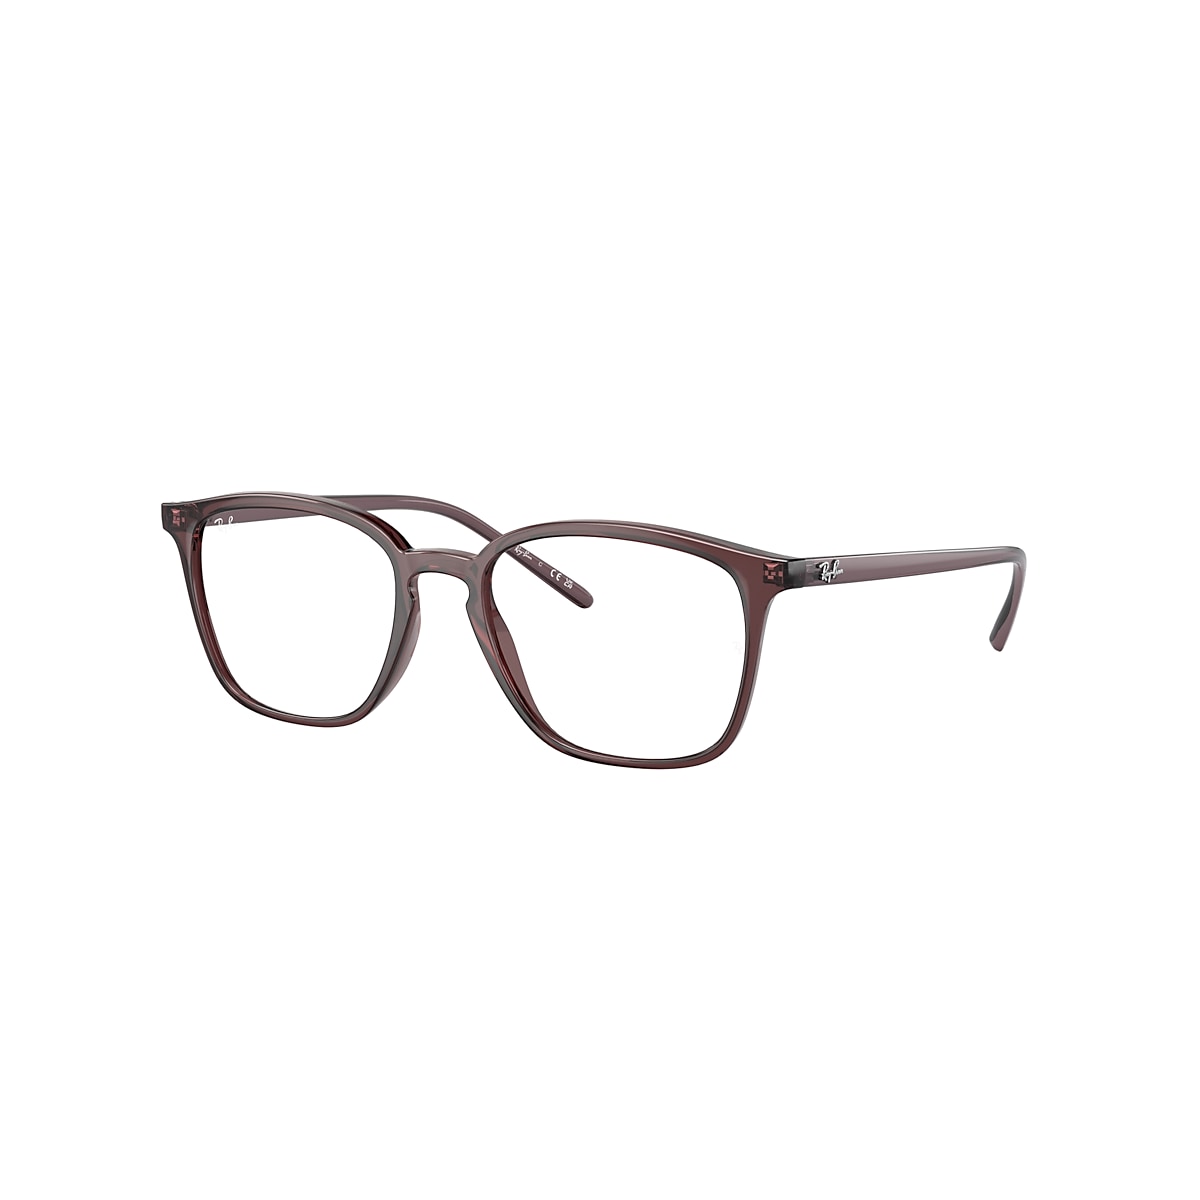 RB7185 OPTICS Eyeglasses with Transparent Brown Frame